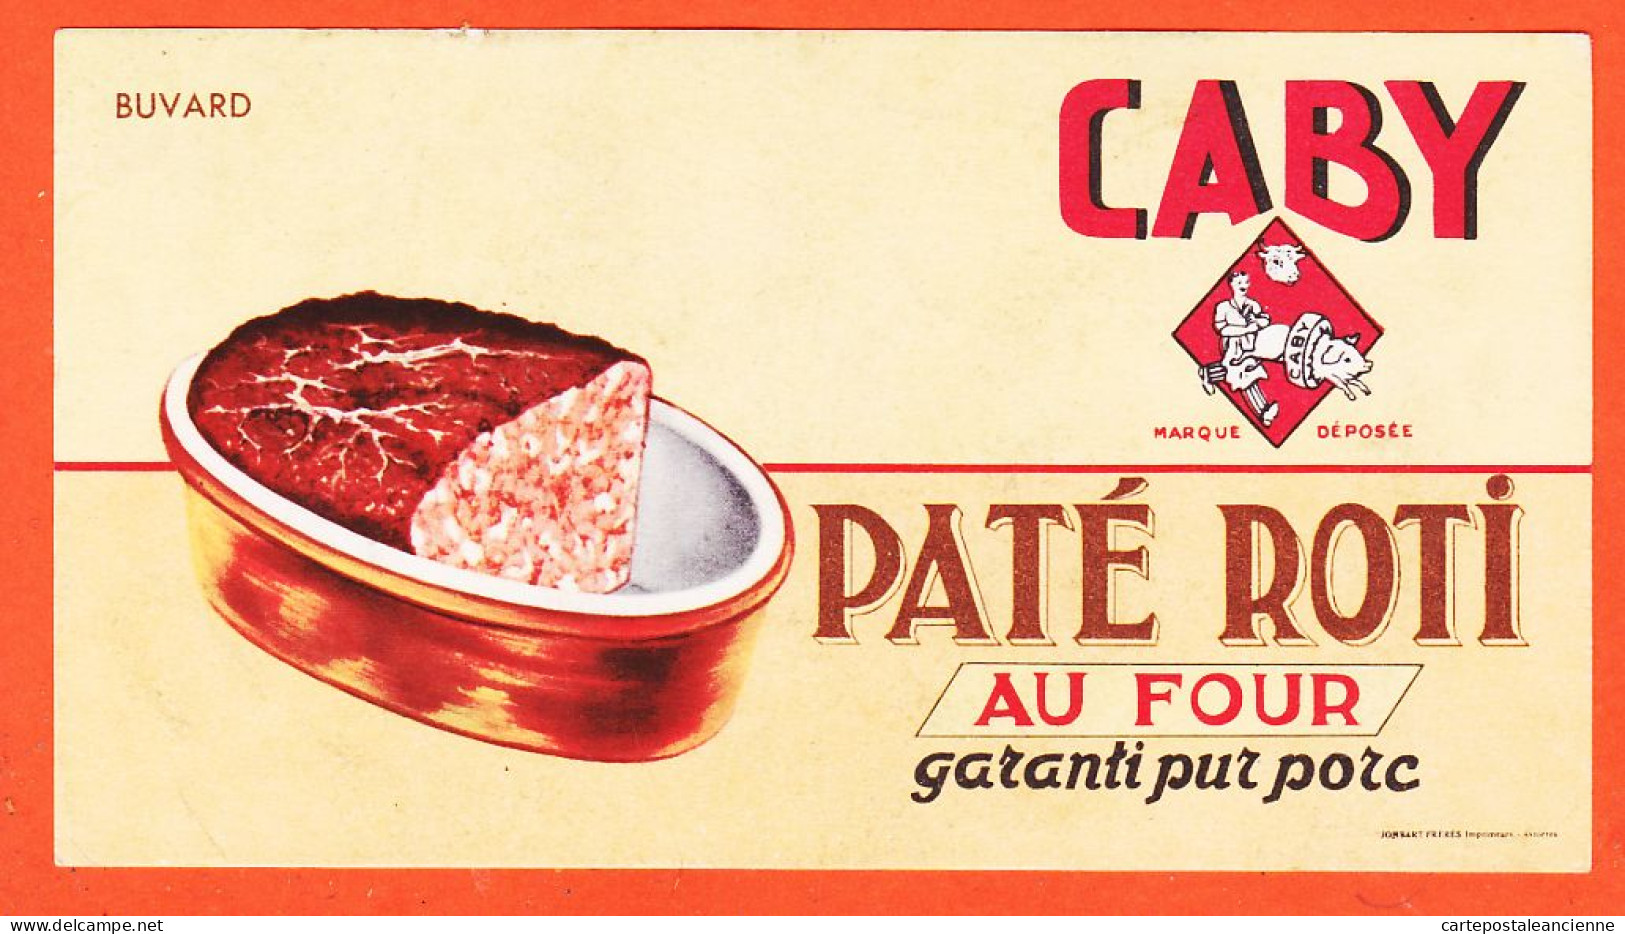 06167 / CABY Paté Roti Four Garanti Pur Porc Imprimeurs JOMBART Frères Asnières Buvard-Blotter - Lebensmittel